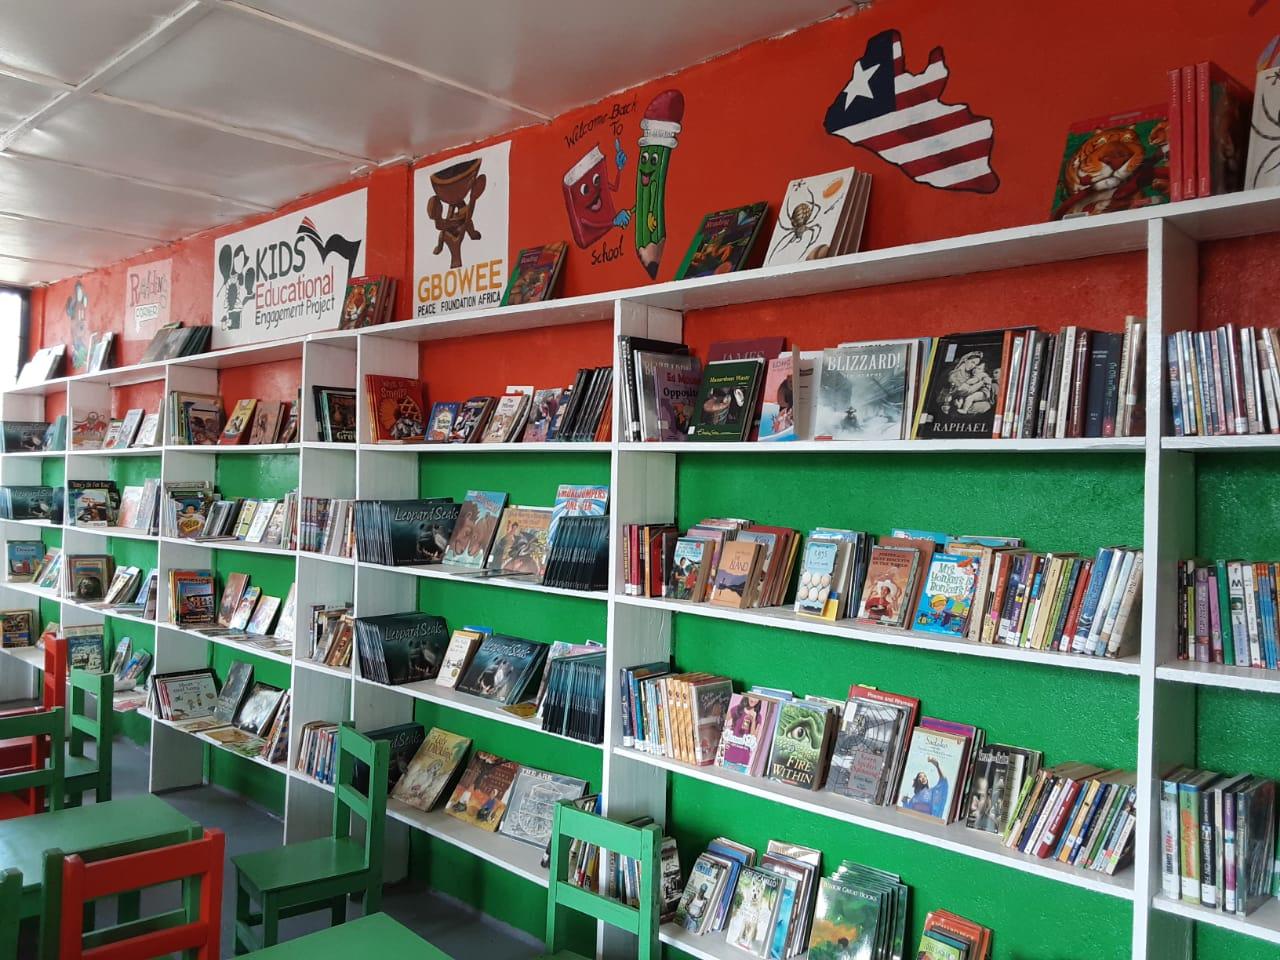 Kids’ Education Engagement Project Dedicates 23rd Reading Room at J. F. Clarke School in Gbarnga